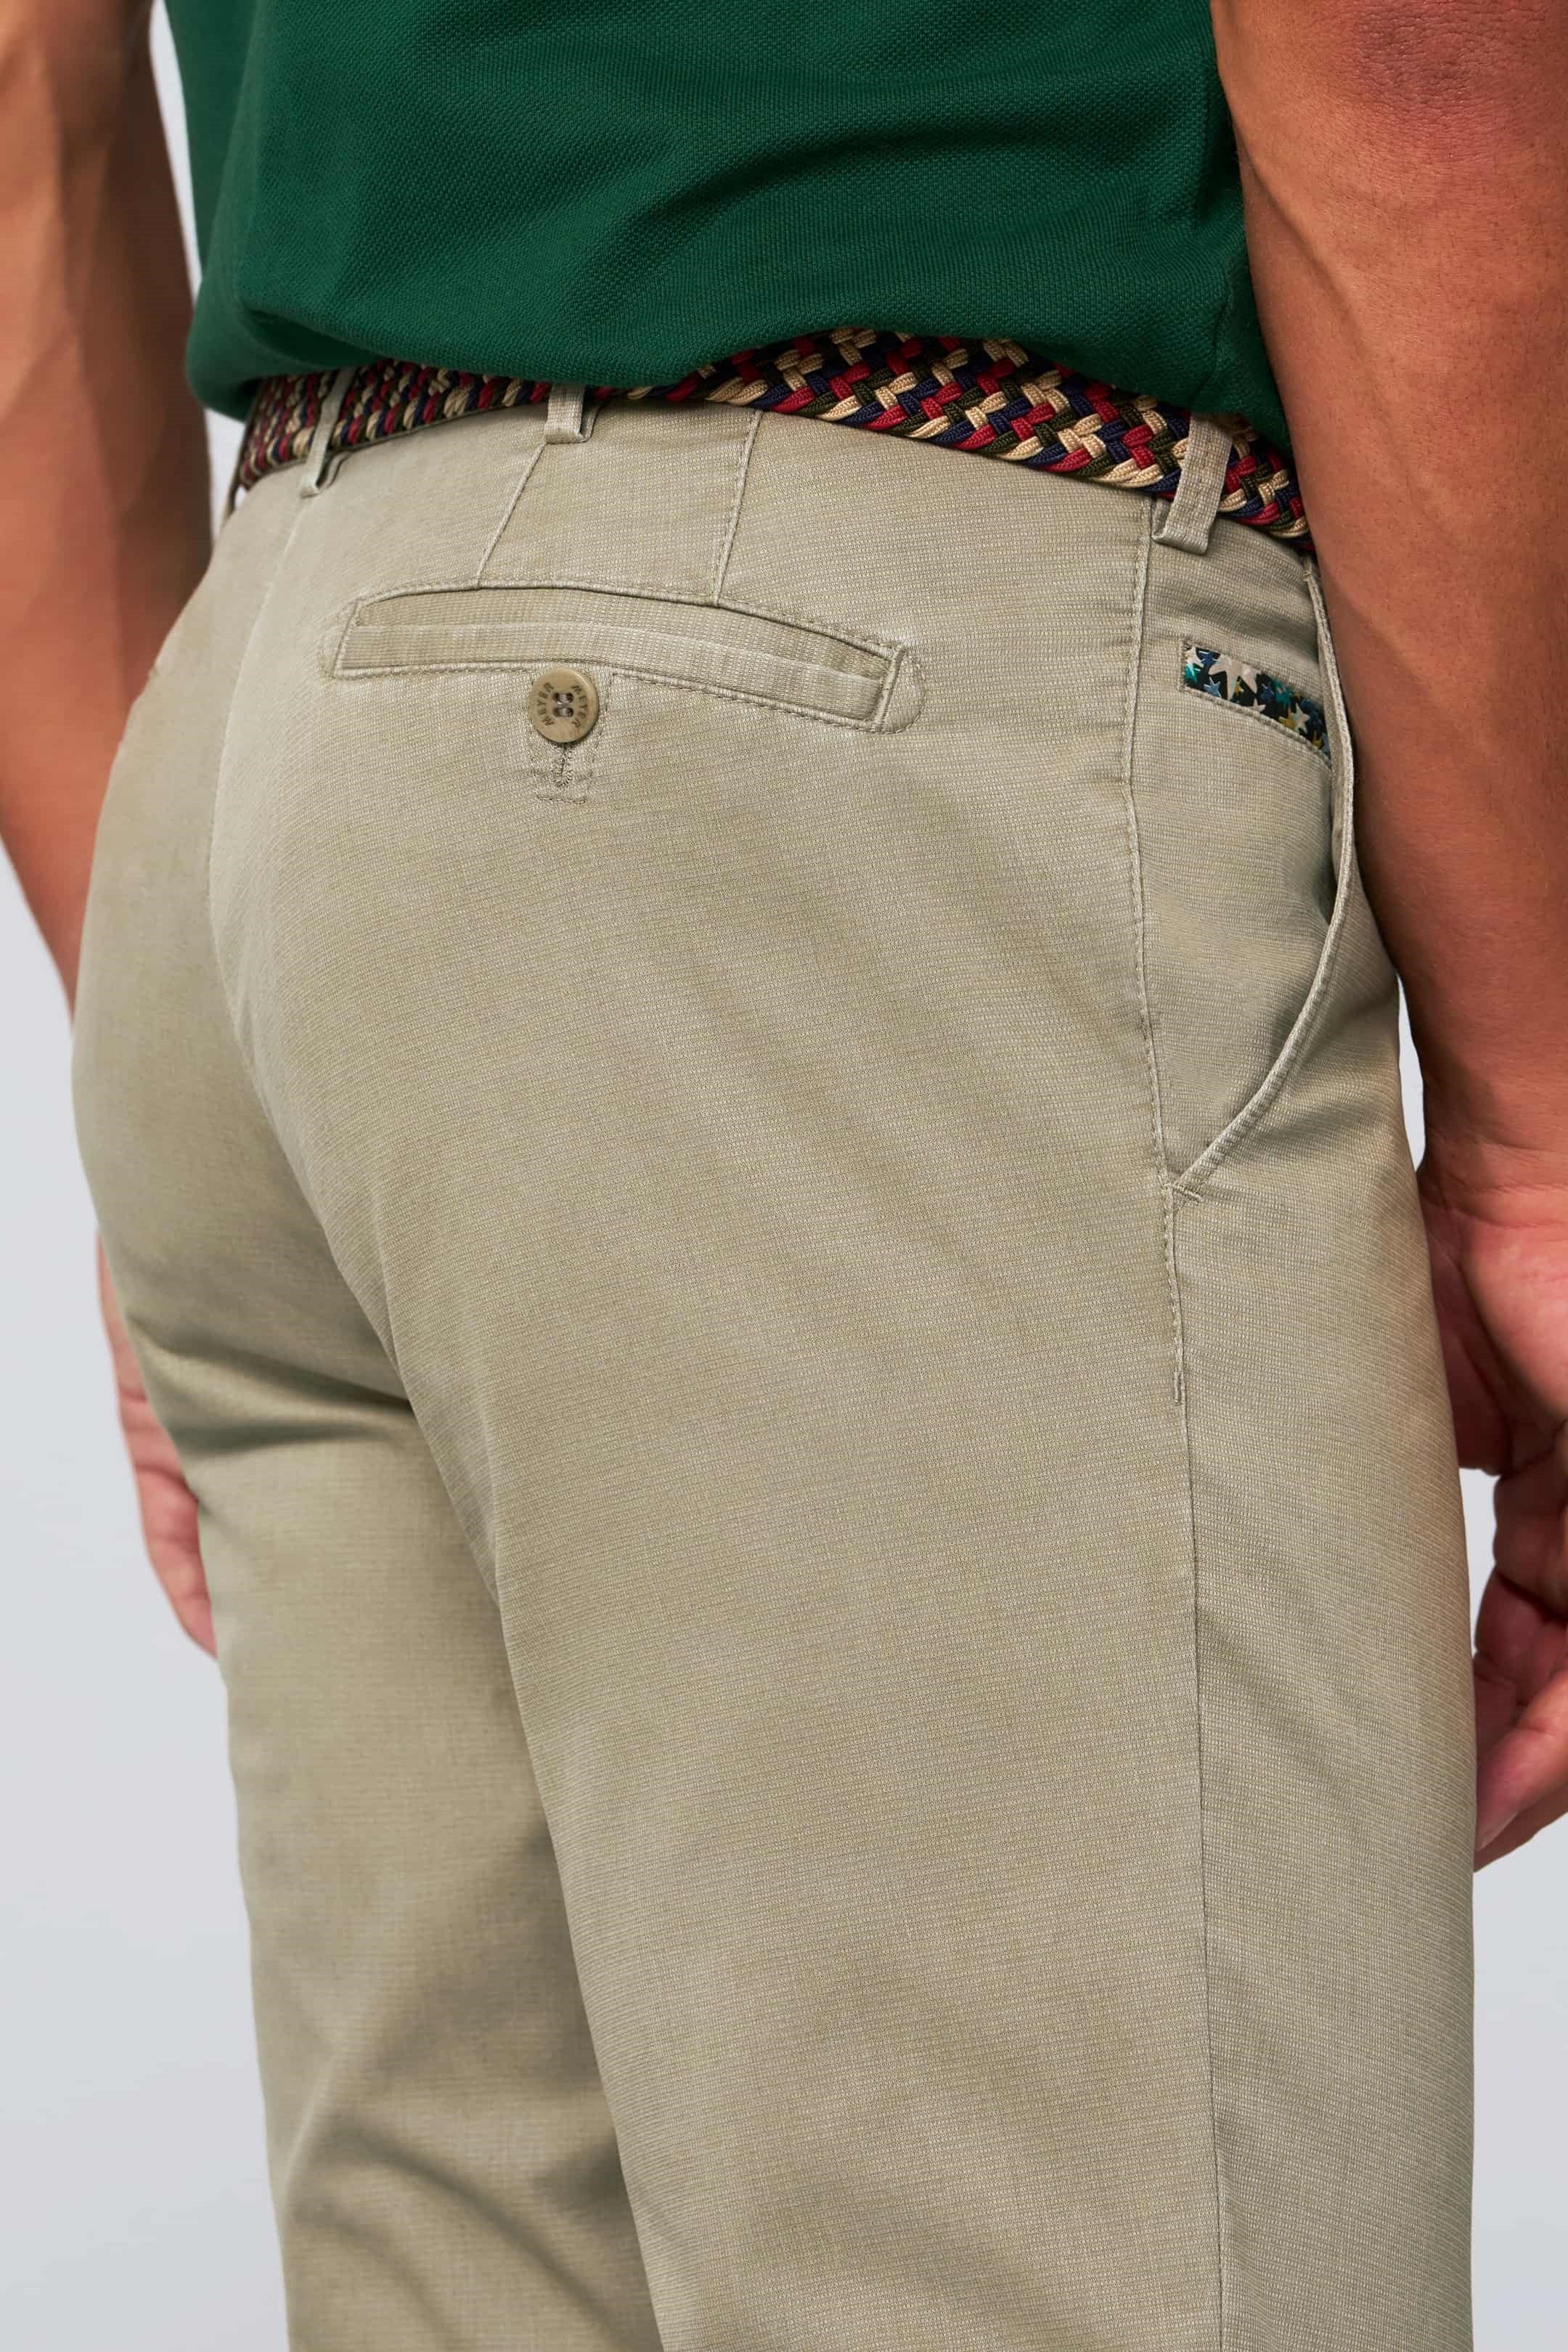 MEYER Trousers - Roma 5058 Liberty Fabric Cotton Chinos - Stone